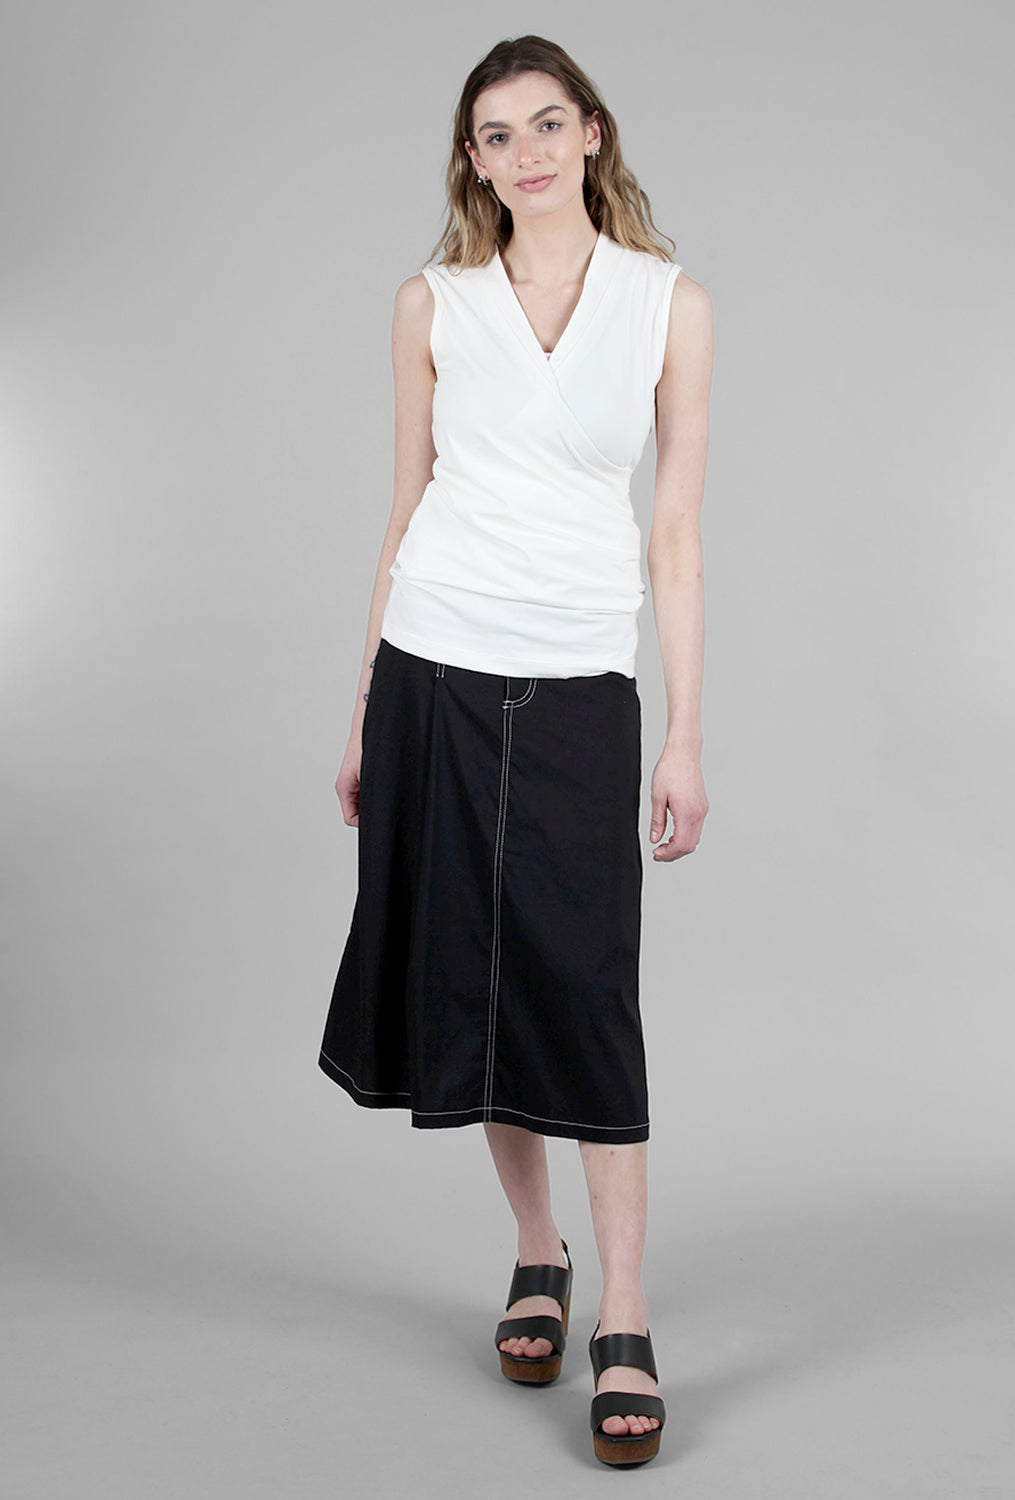 Perla Jeans-Stitch Skirt, Black